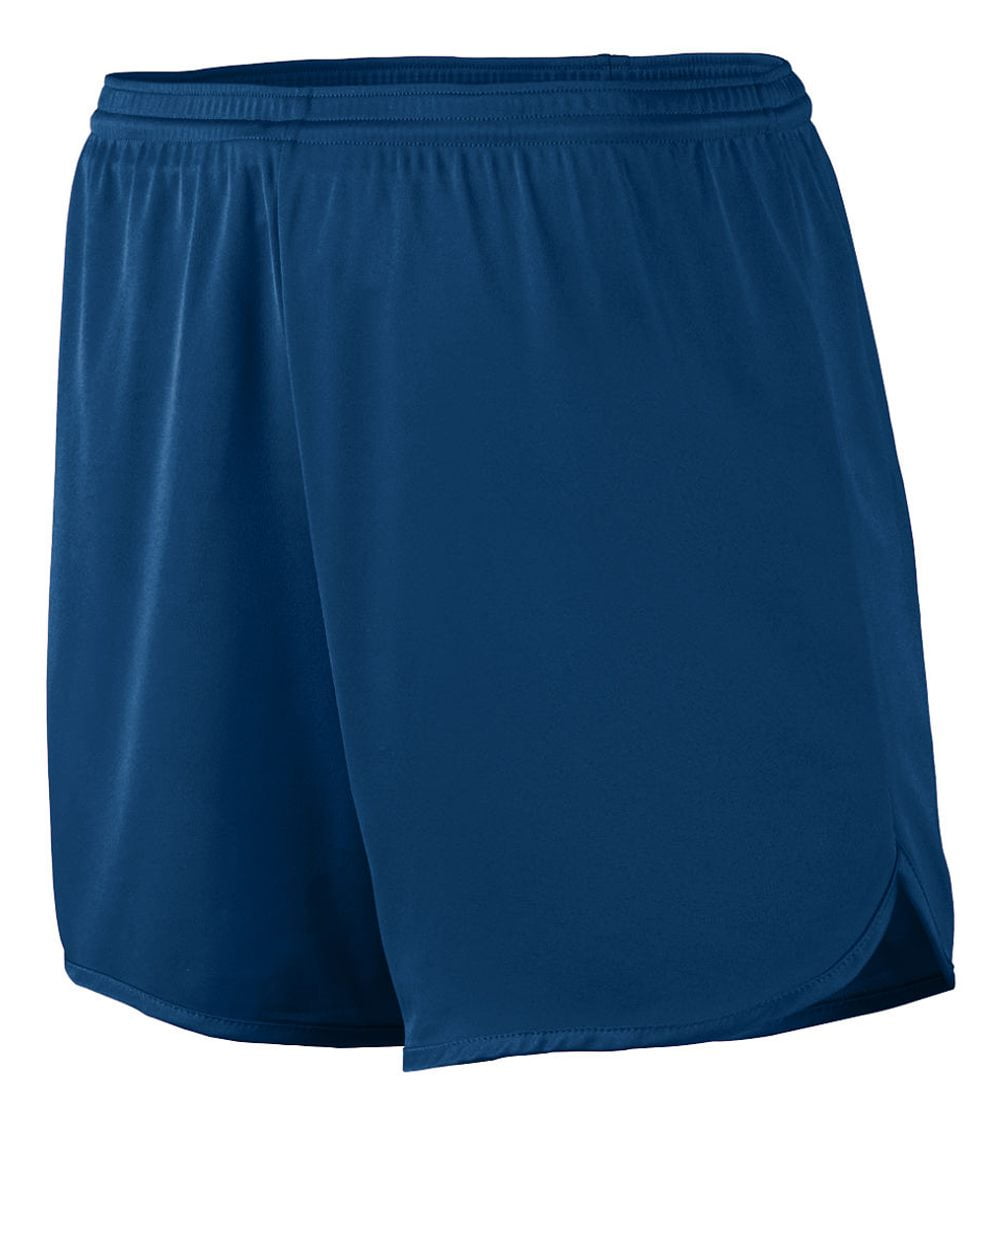 Augusta Sportswear Accelerate Shorts Size up to 2XL - Walmart.com